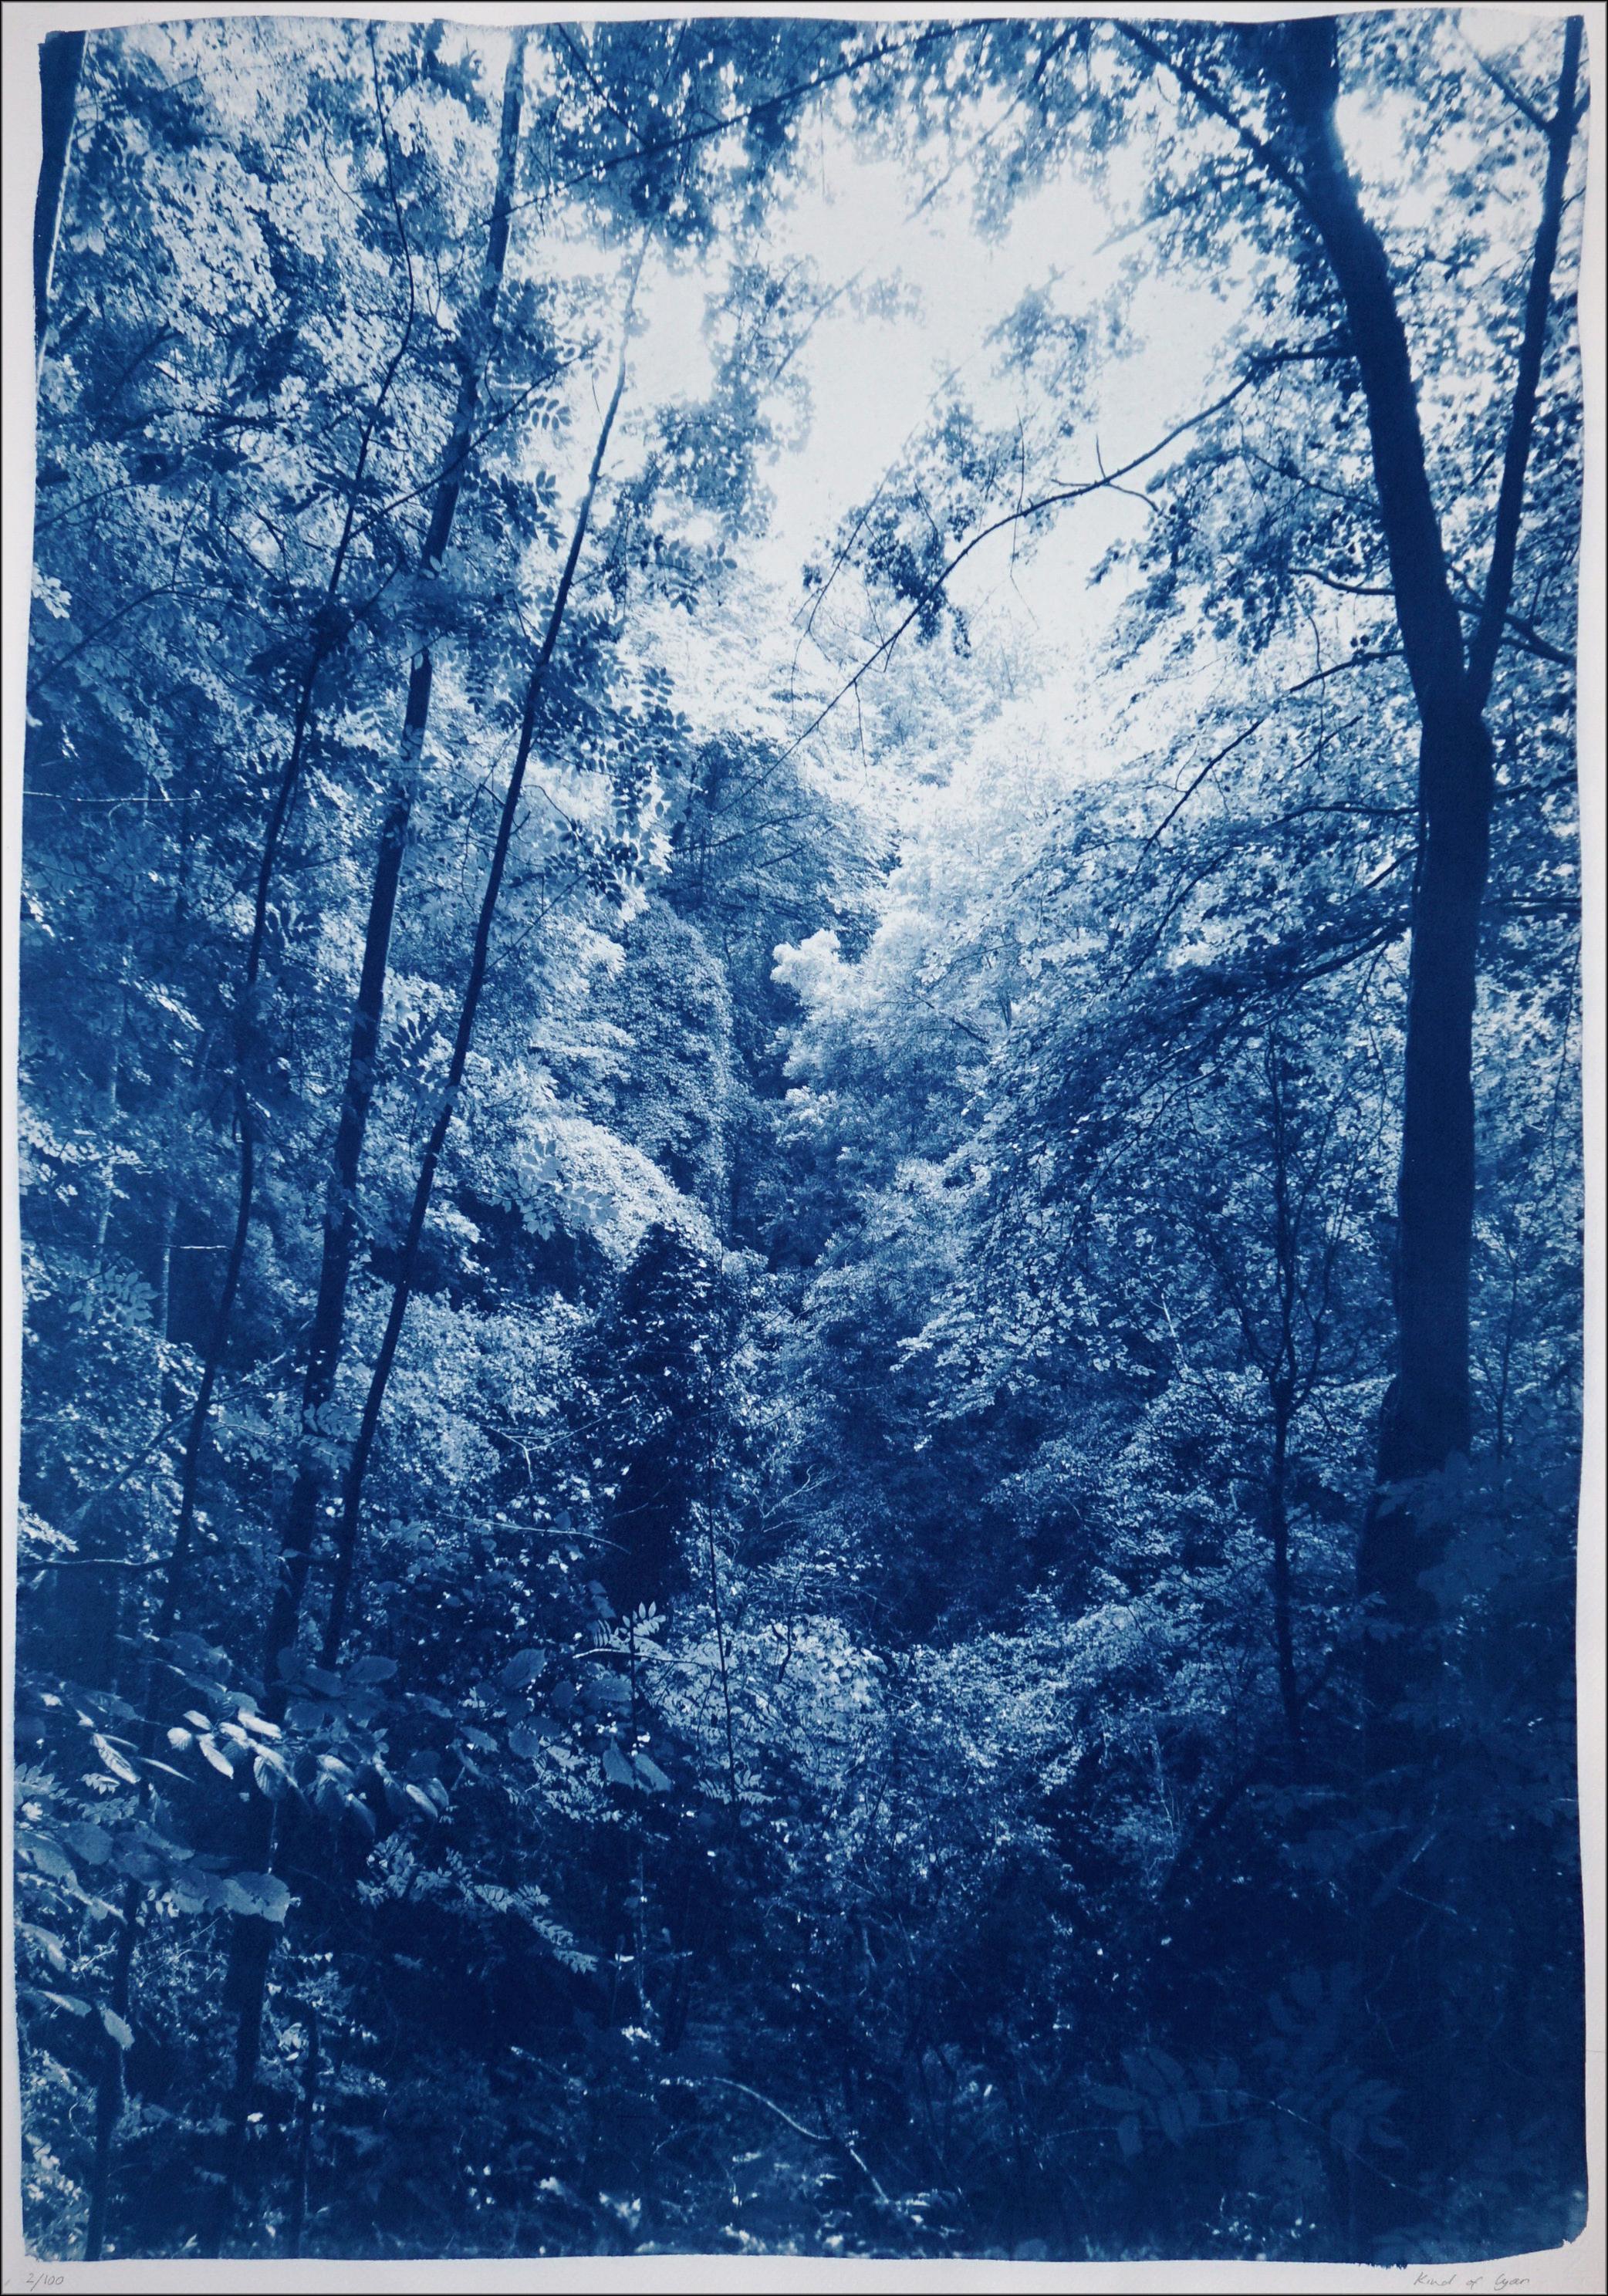 Kind of Cyan Landscape Print - Soft Light in the Woods, Forest Landscape, Blue Tones, Handmade Cyanotype Print